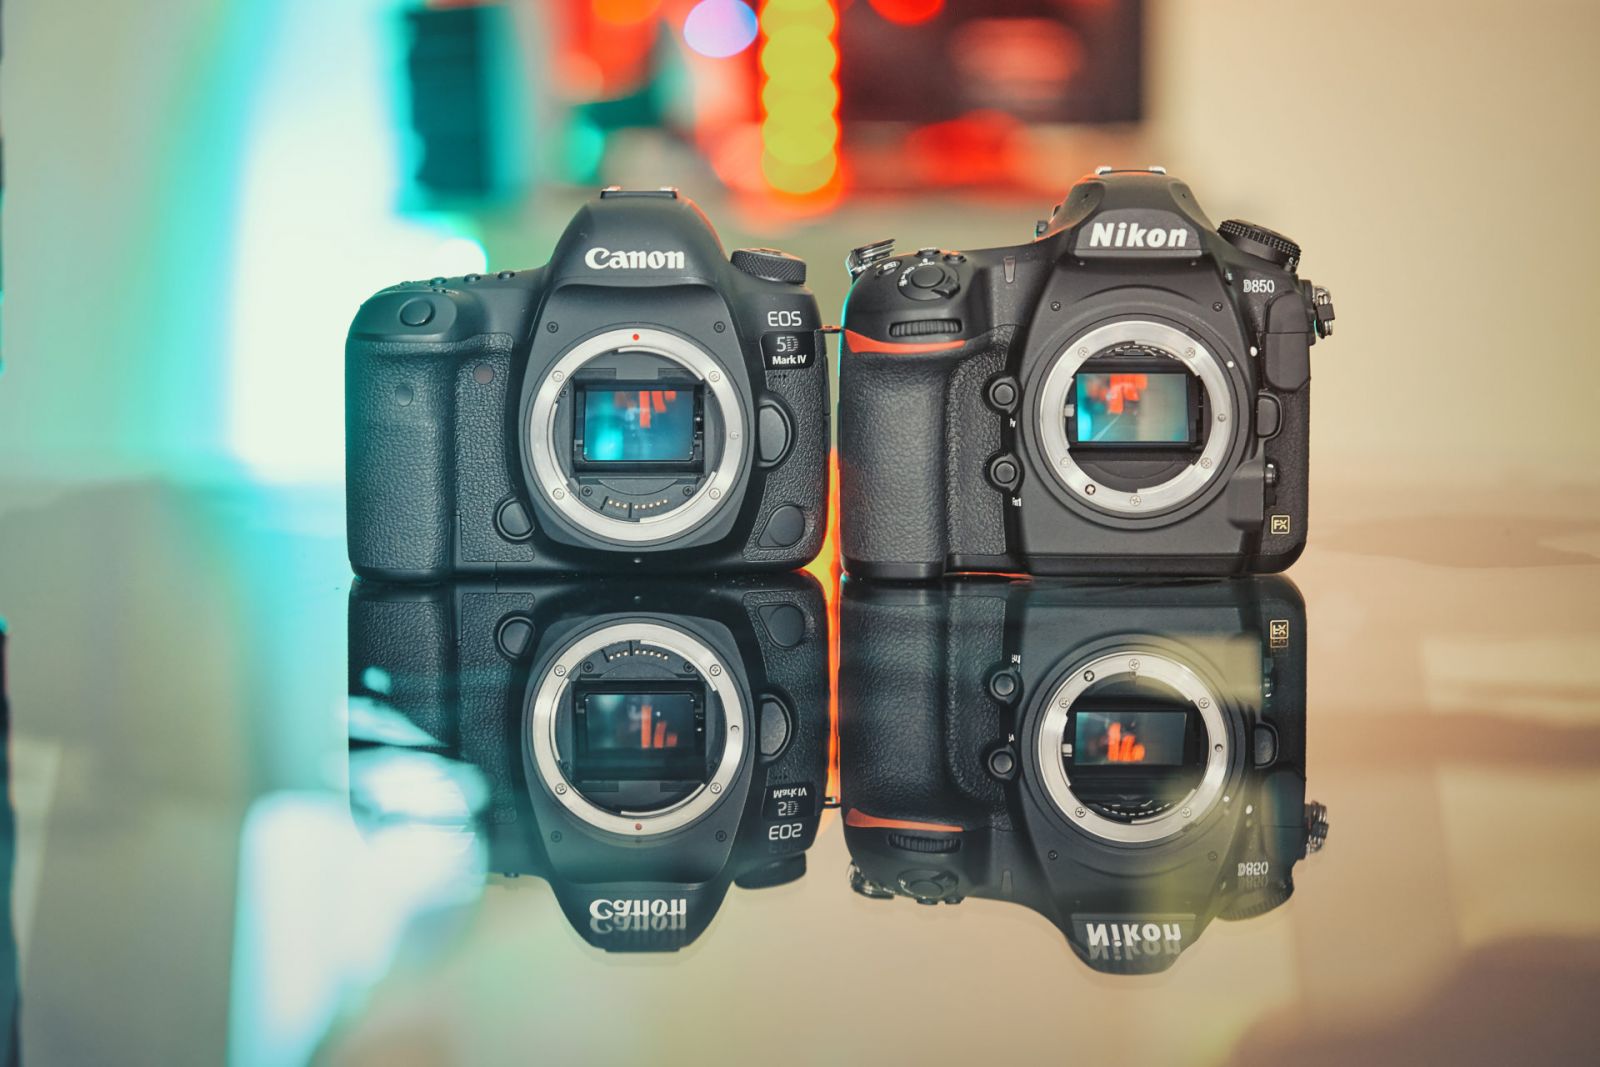 Nikon D850 vs Canon EOS 5D mark IV